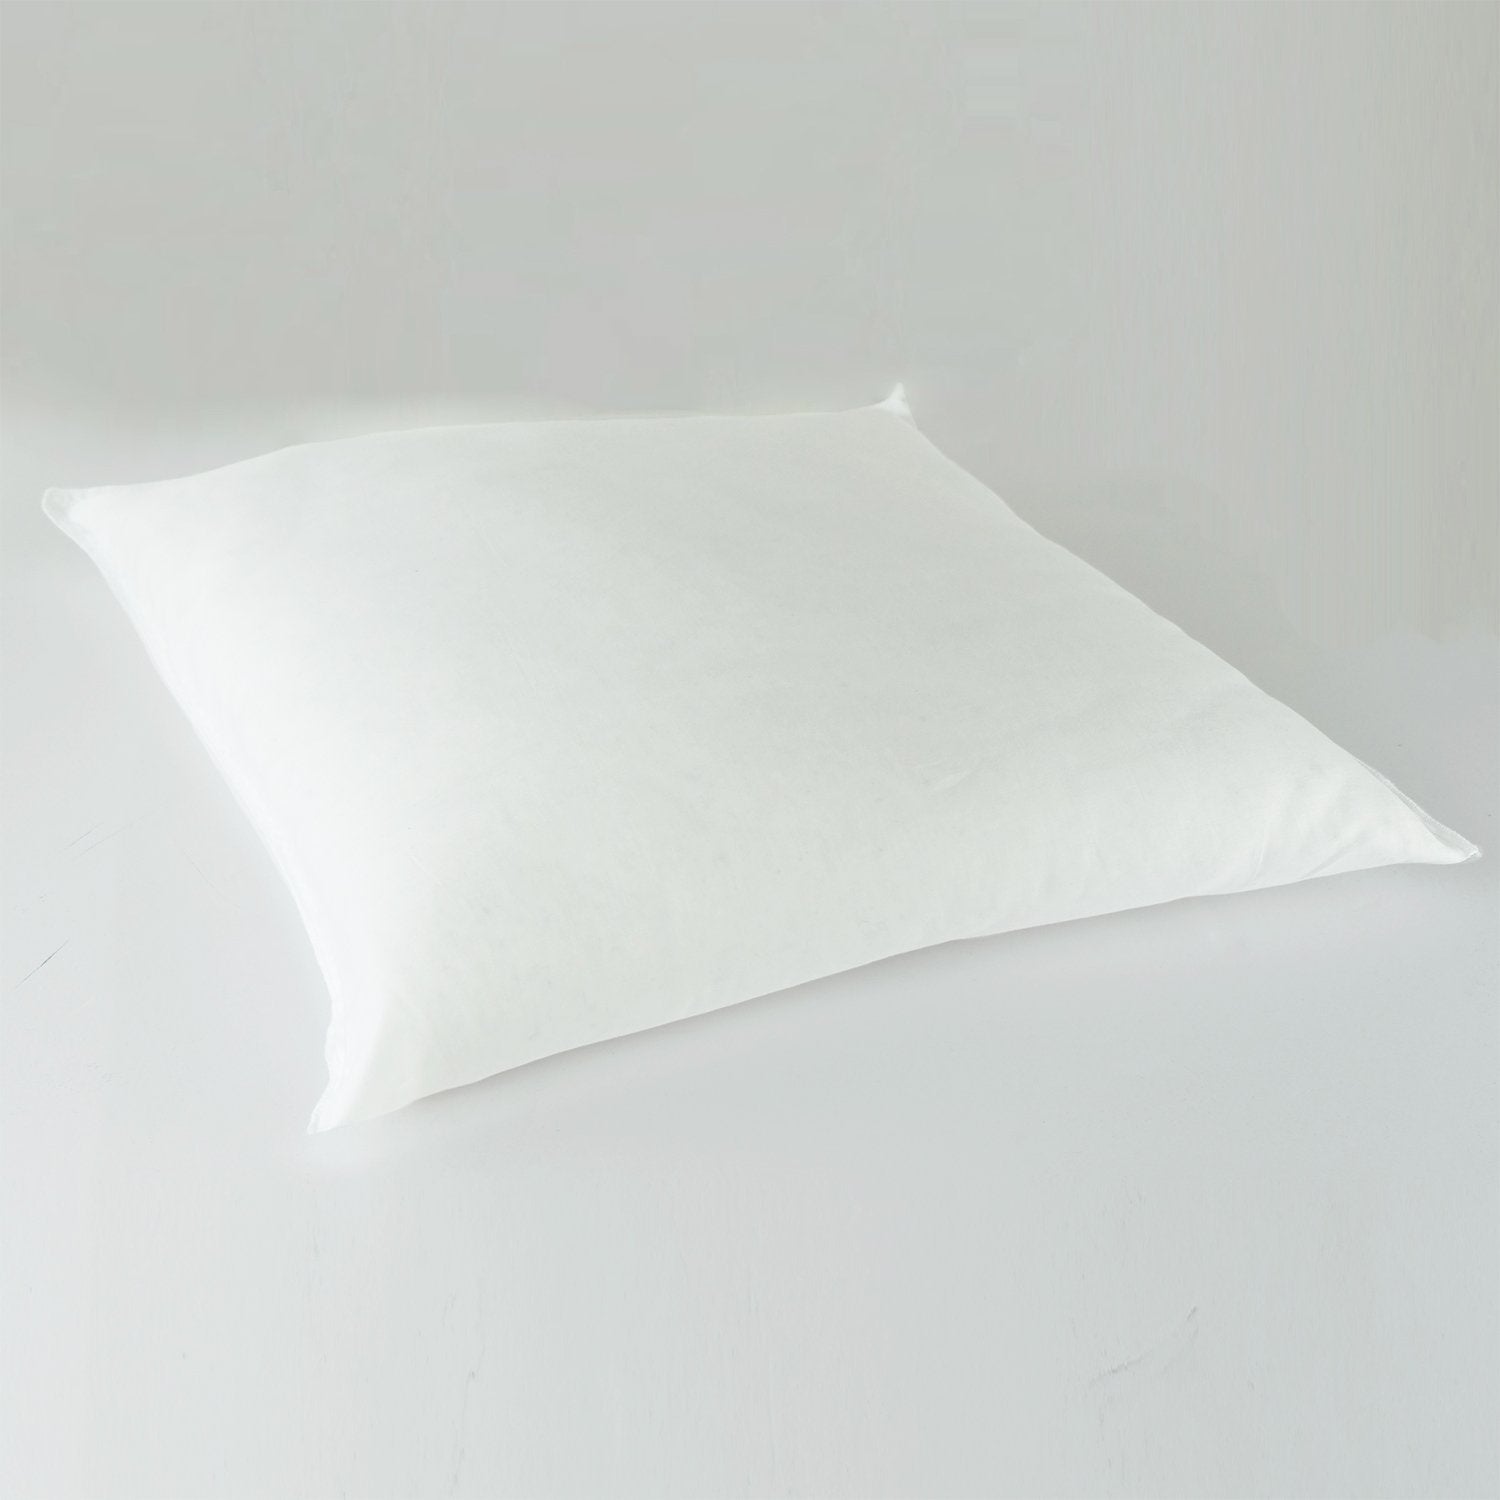 J-Life Usagi "Bunny" Red Zabuton Floor Pillow_Pillows & Shams_Zabuton Floor Pillows_100% Cotton_Reversible_Handmade